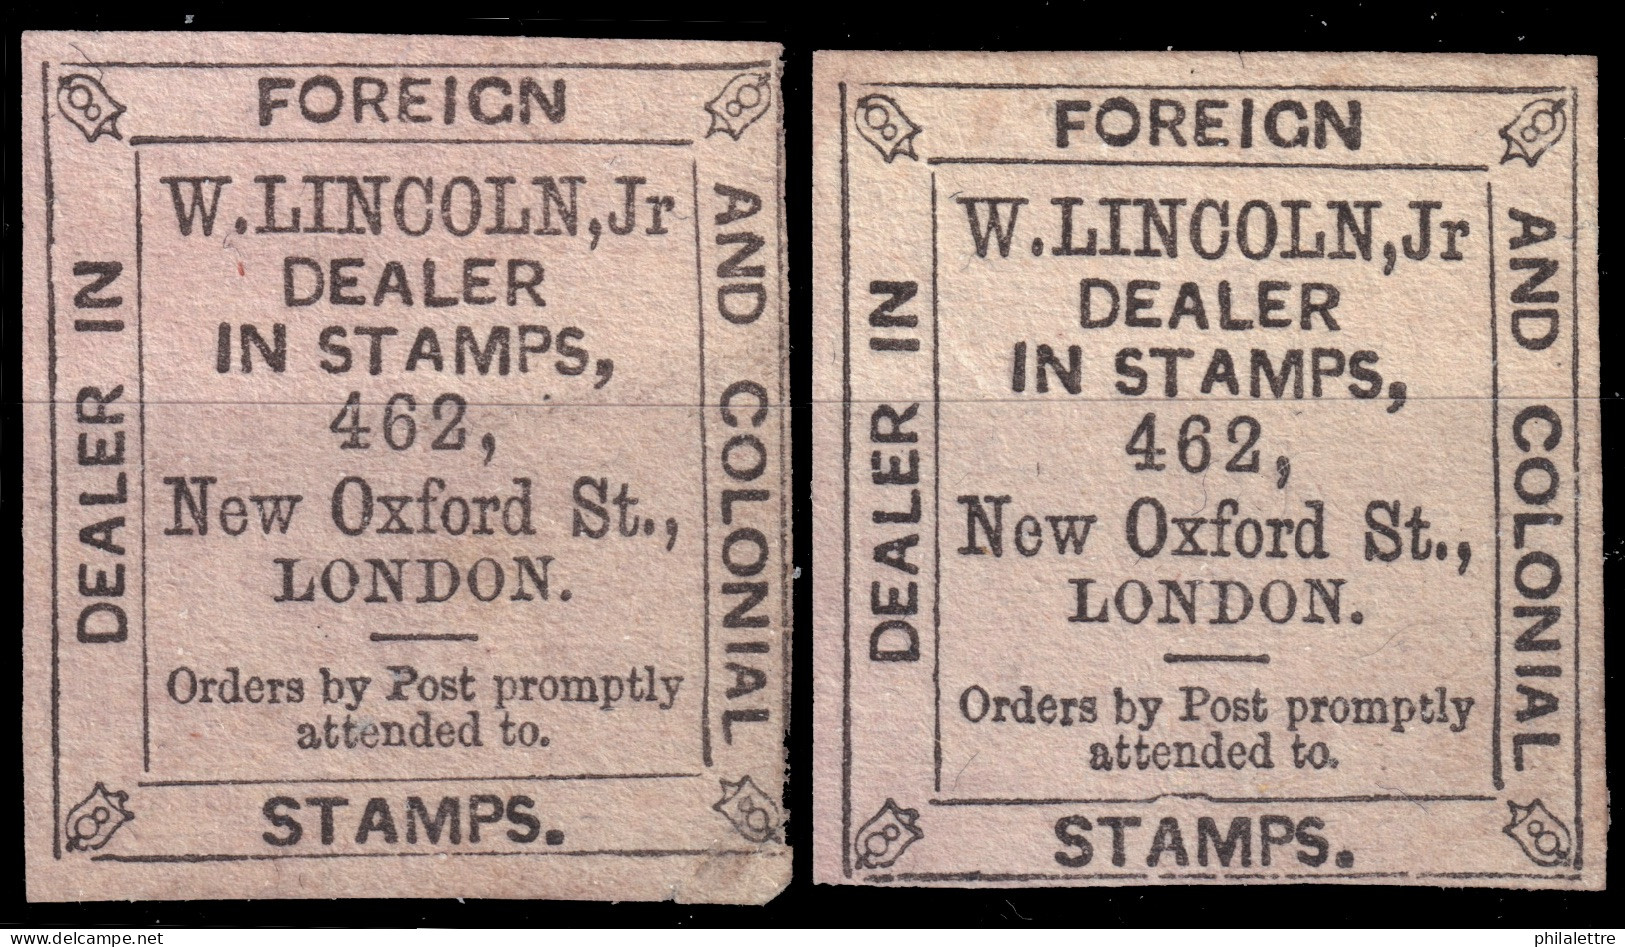 ROYAUME-UNI / UNITED KINGDOM - 2x 1900s/1920s Labels For Stamp Dealer William Lincoln, Jr. Black On Pinkish White - Cinderella